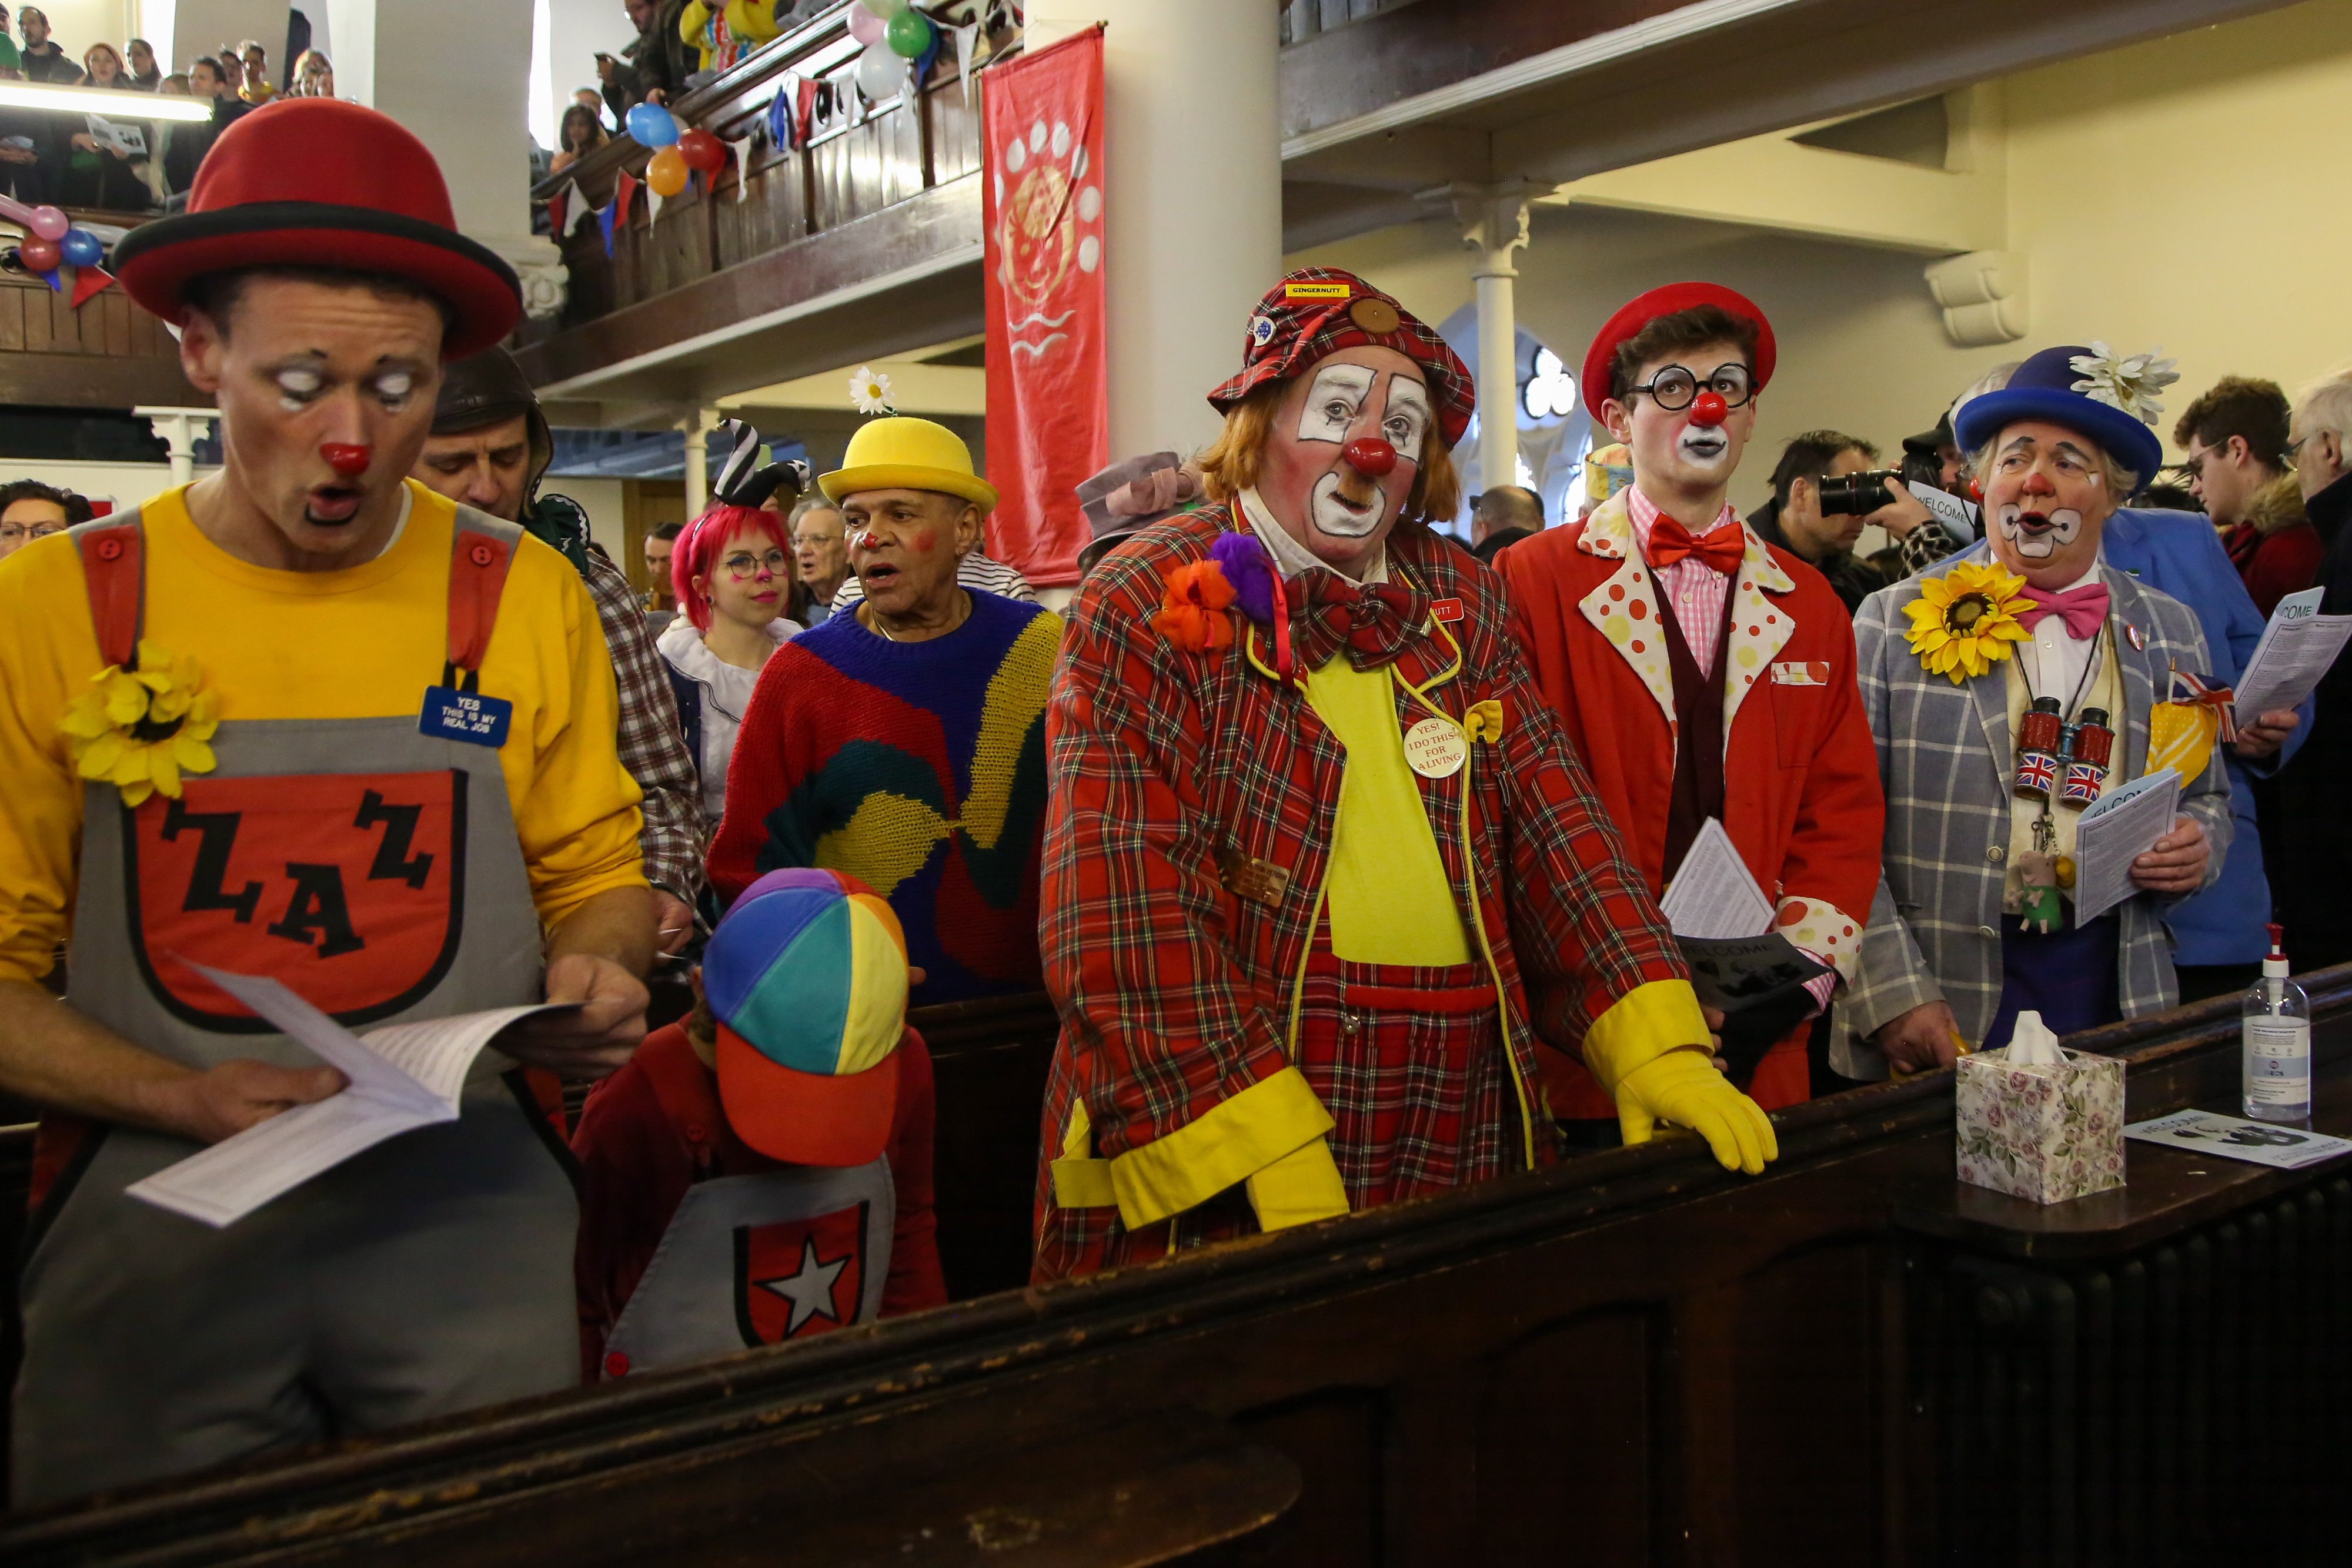 The 77th annual clown church service in memory of Joseph Grimaldi in London